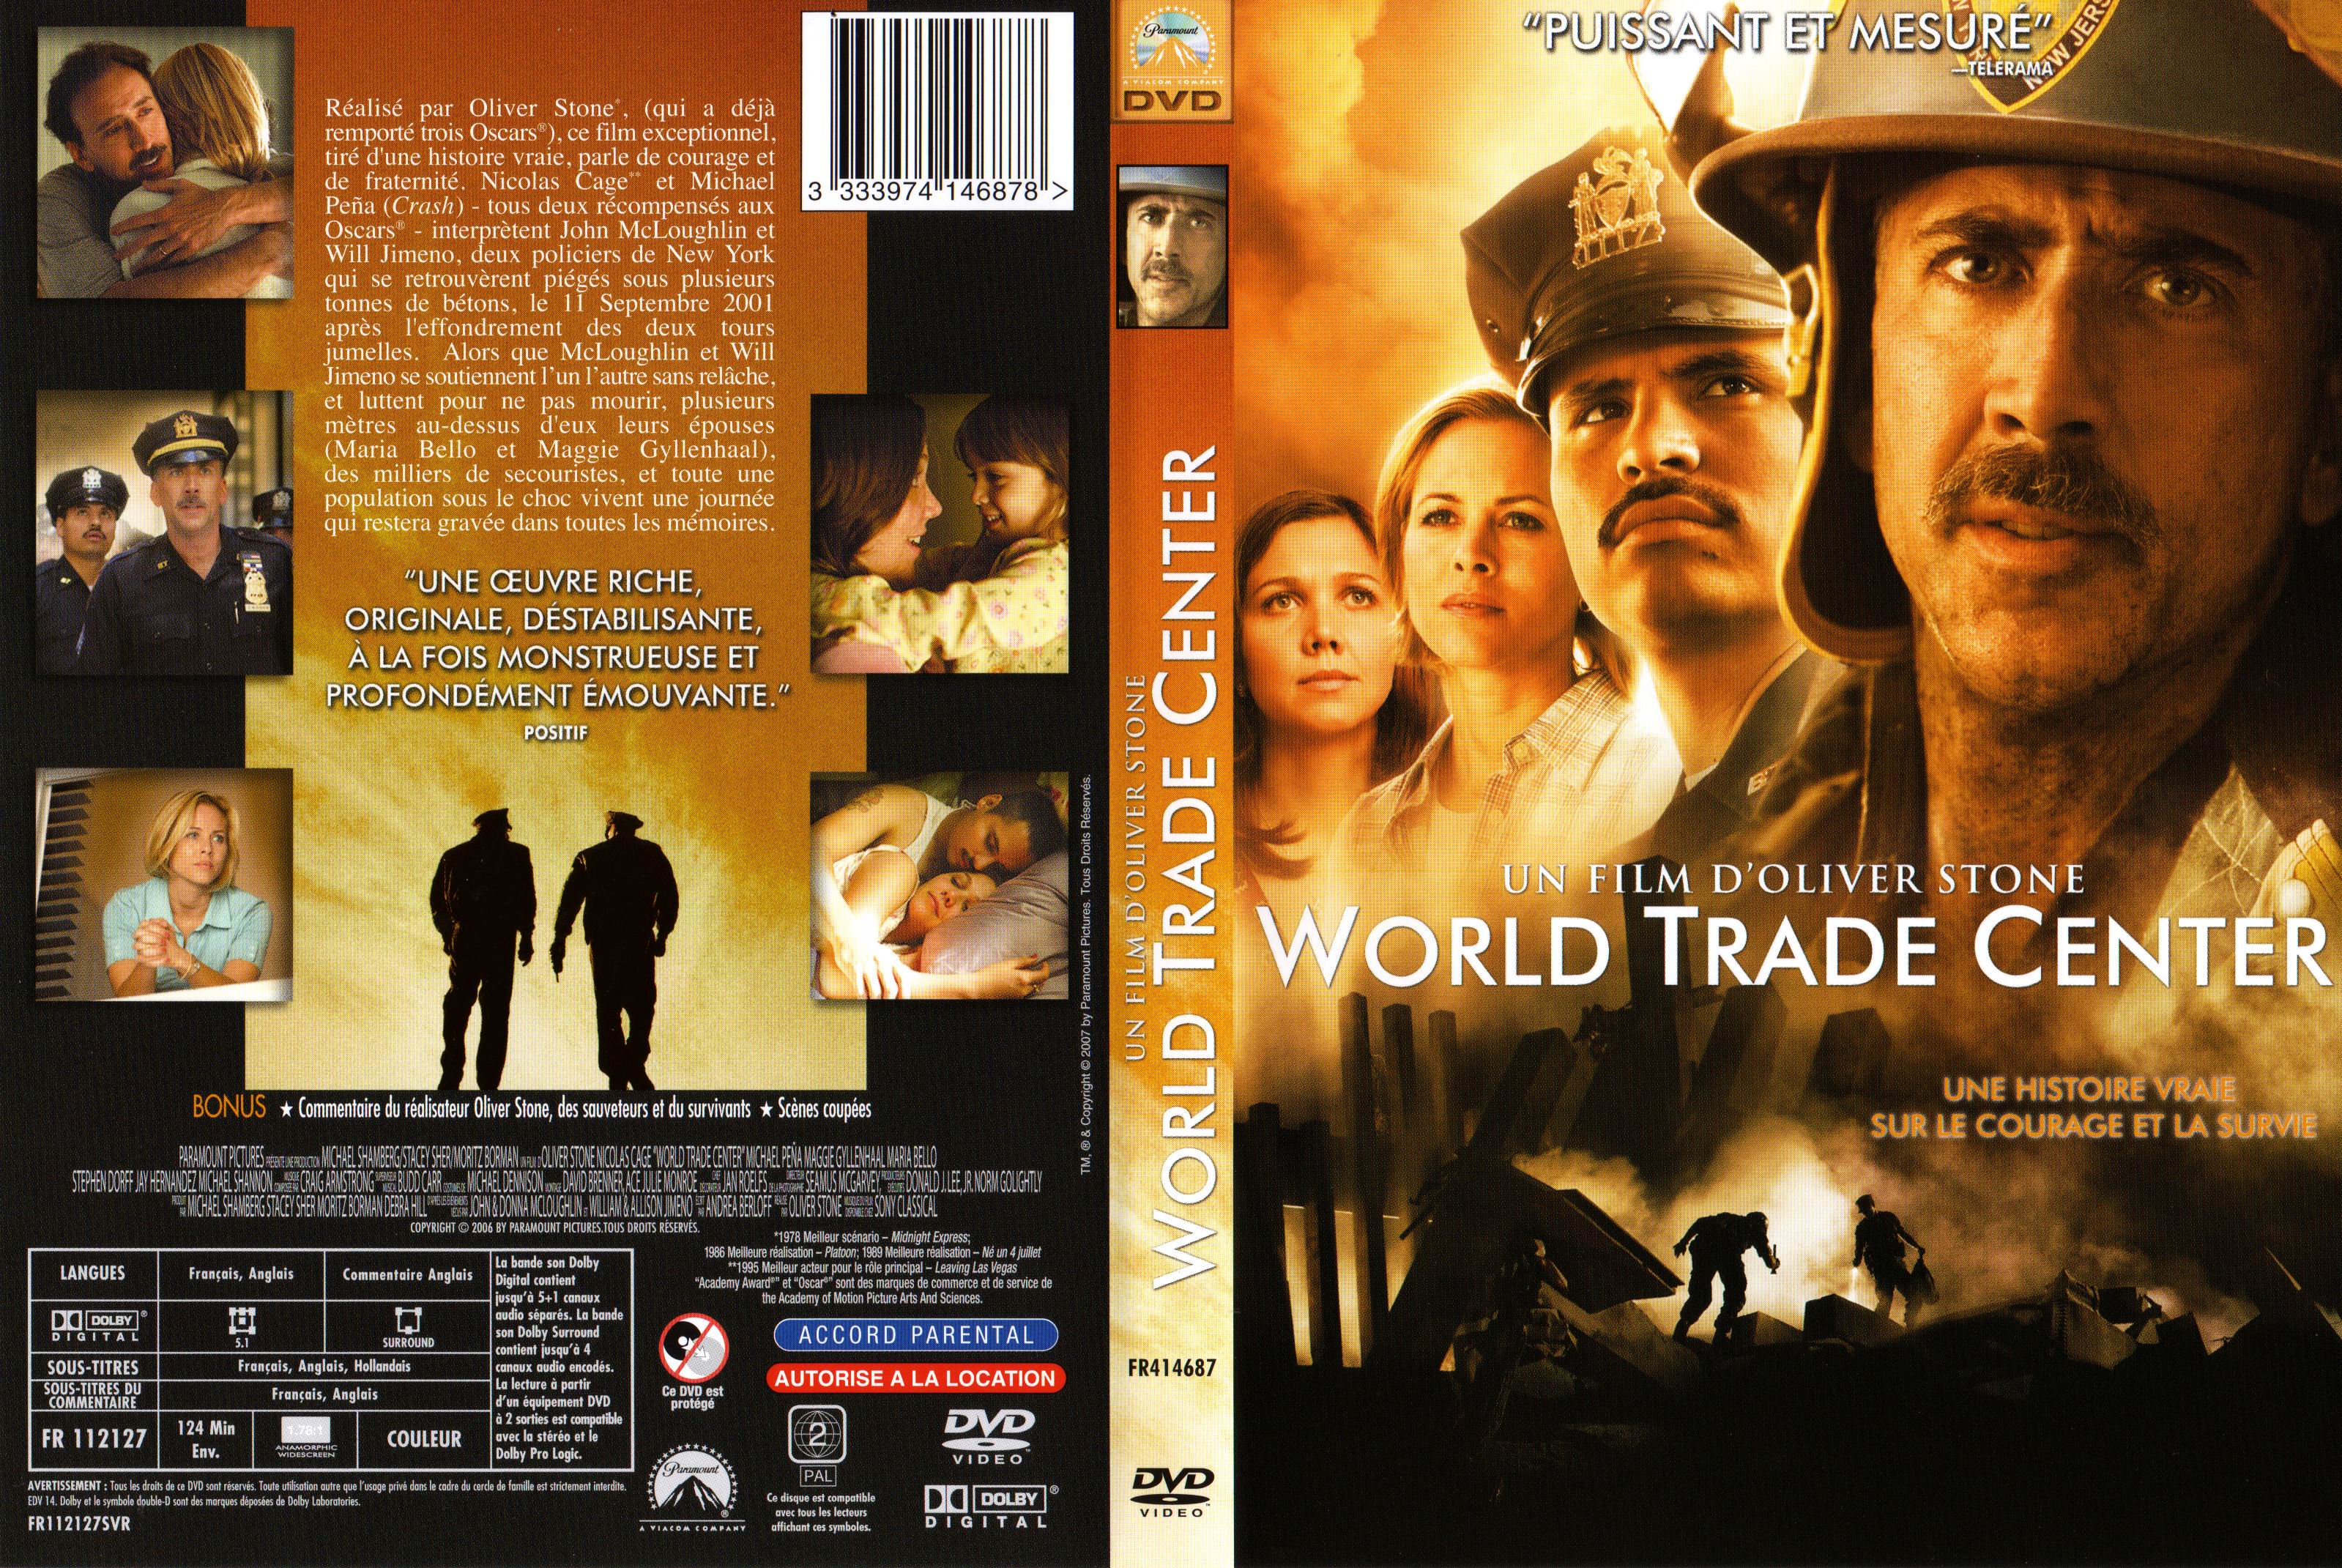 Jaquette DVD World trade center